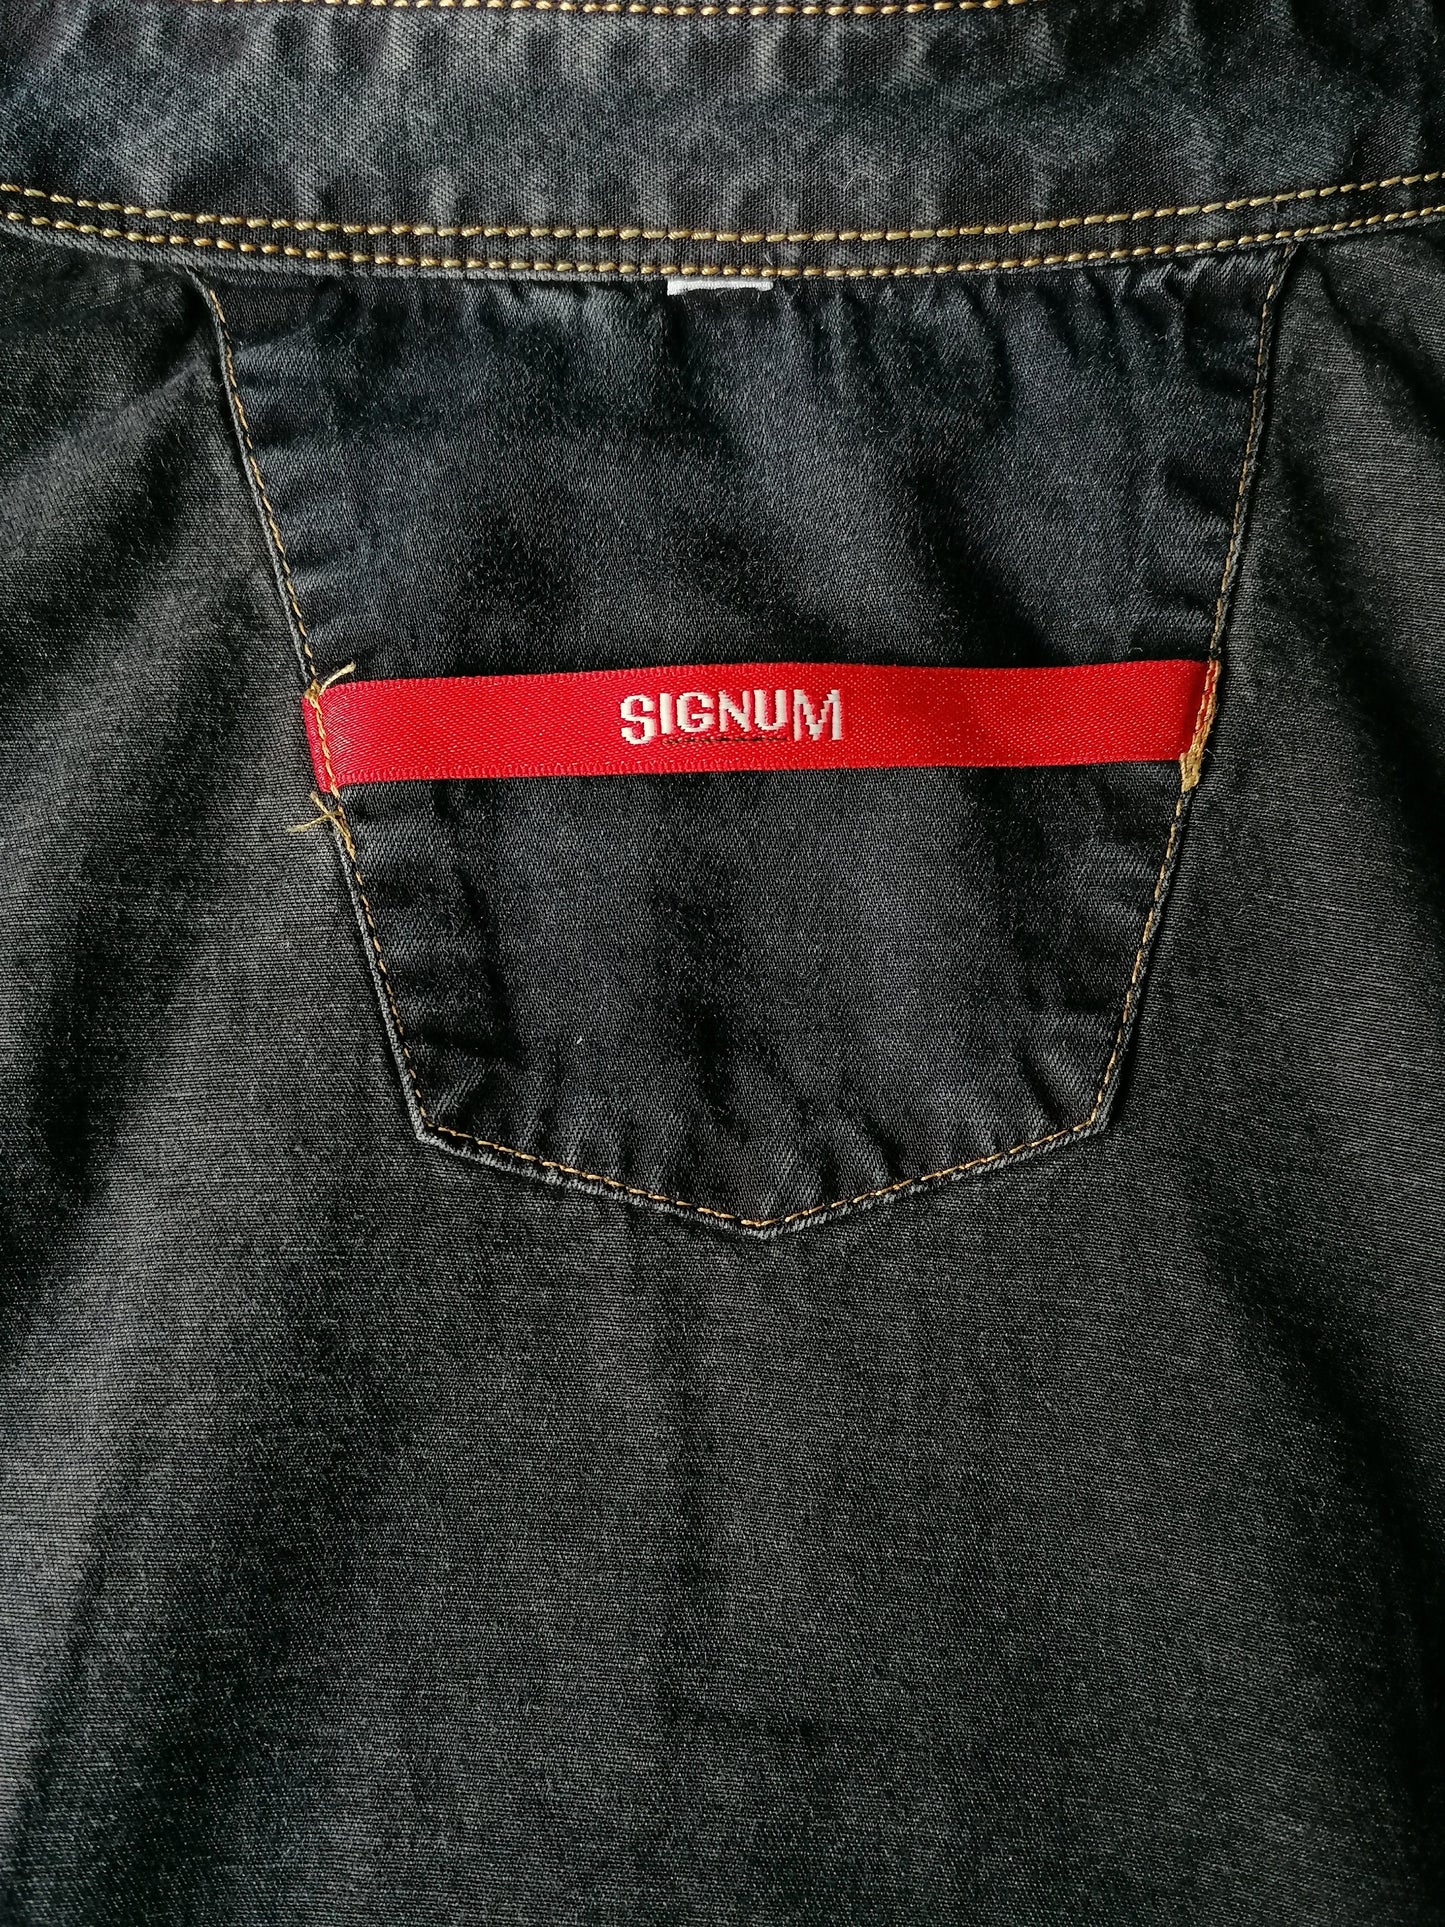 Vintage Signum Shirt. Große Knöpfe. Denim-Look. Dunkelblau. Größe XXL / 2XL